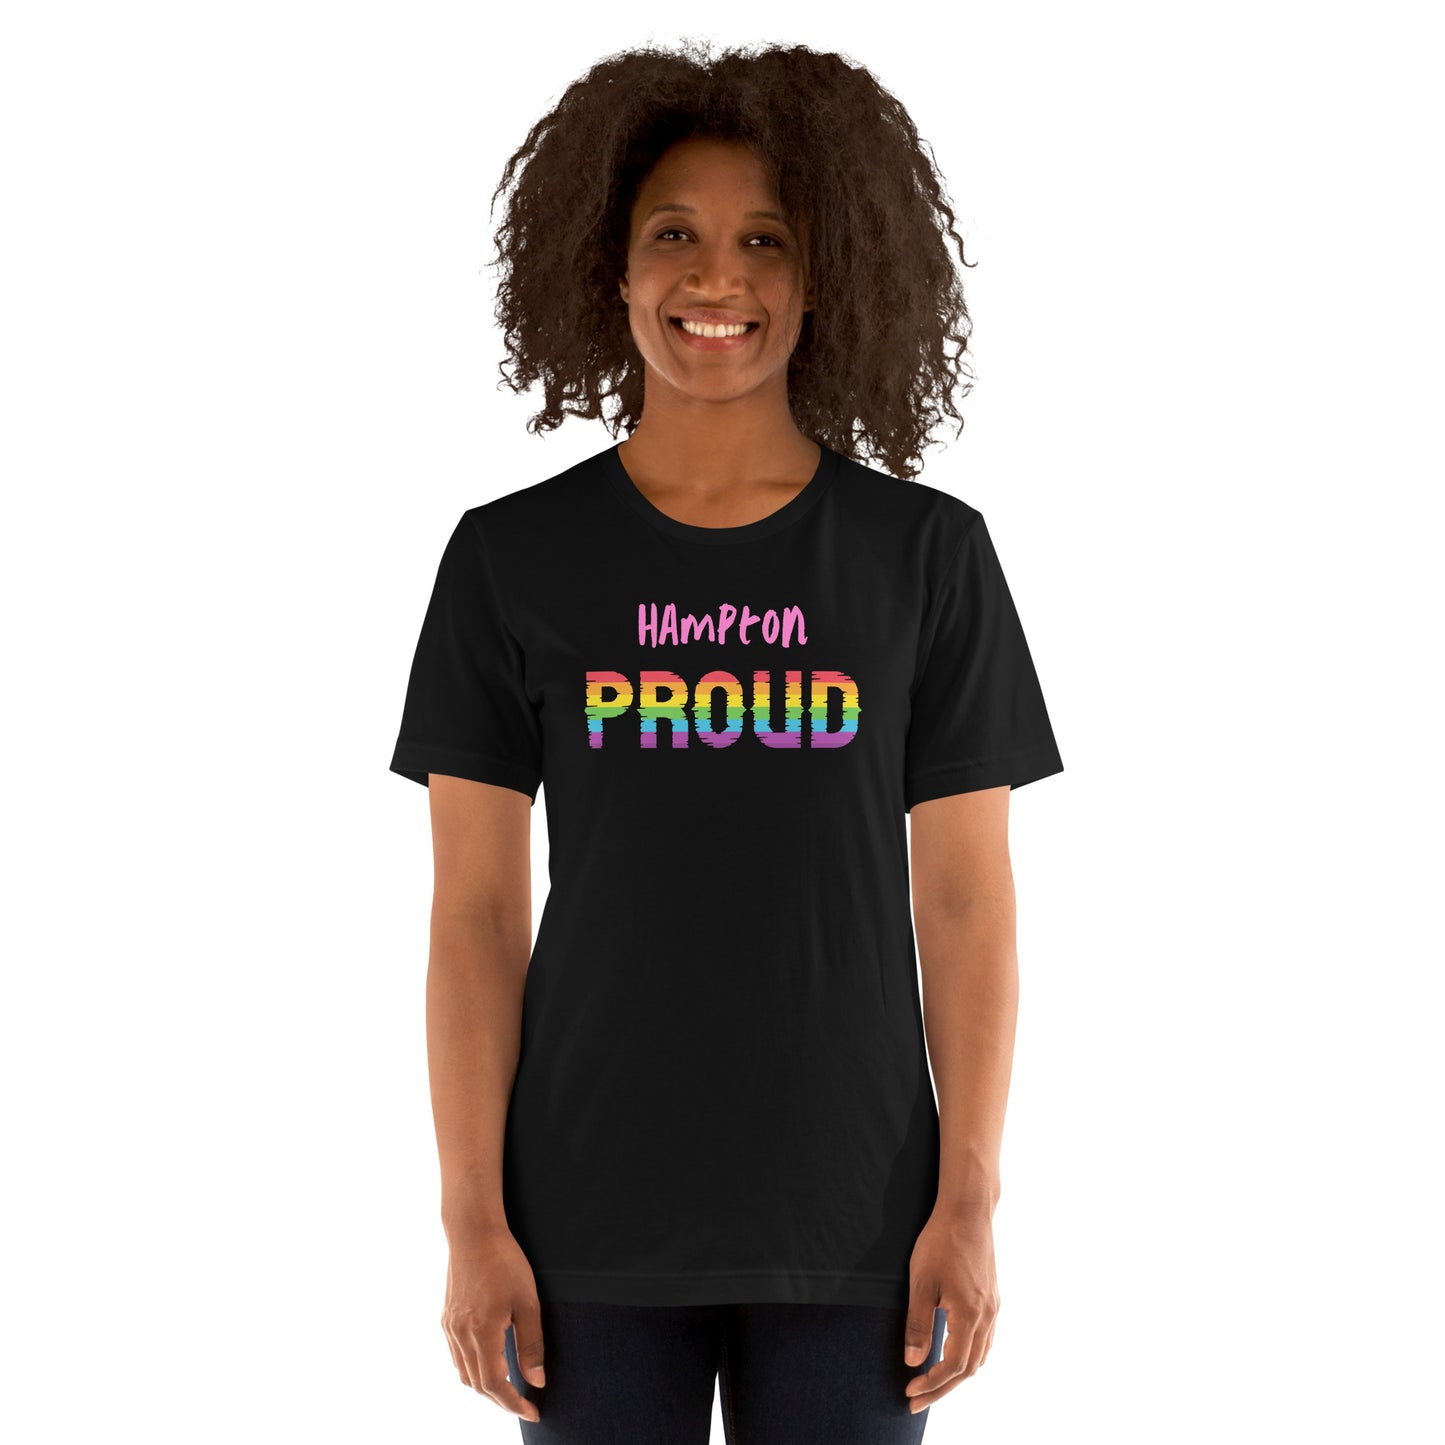 "Hampton Proud" unisex t-shirt